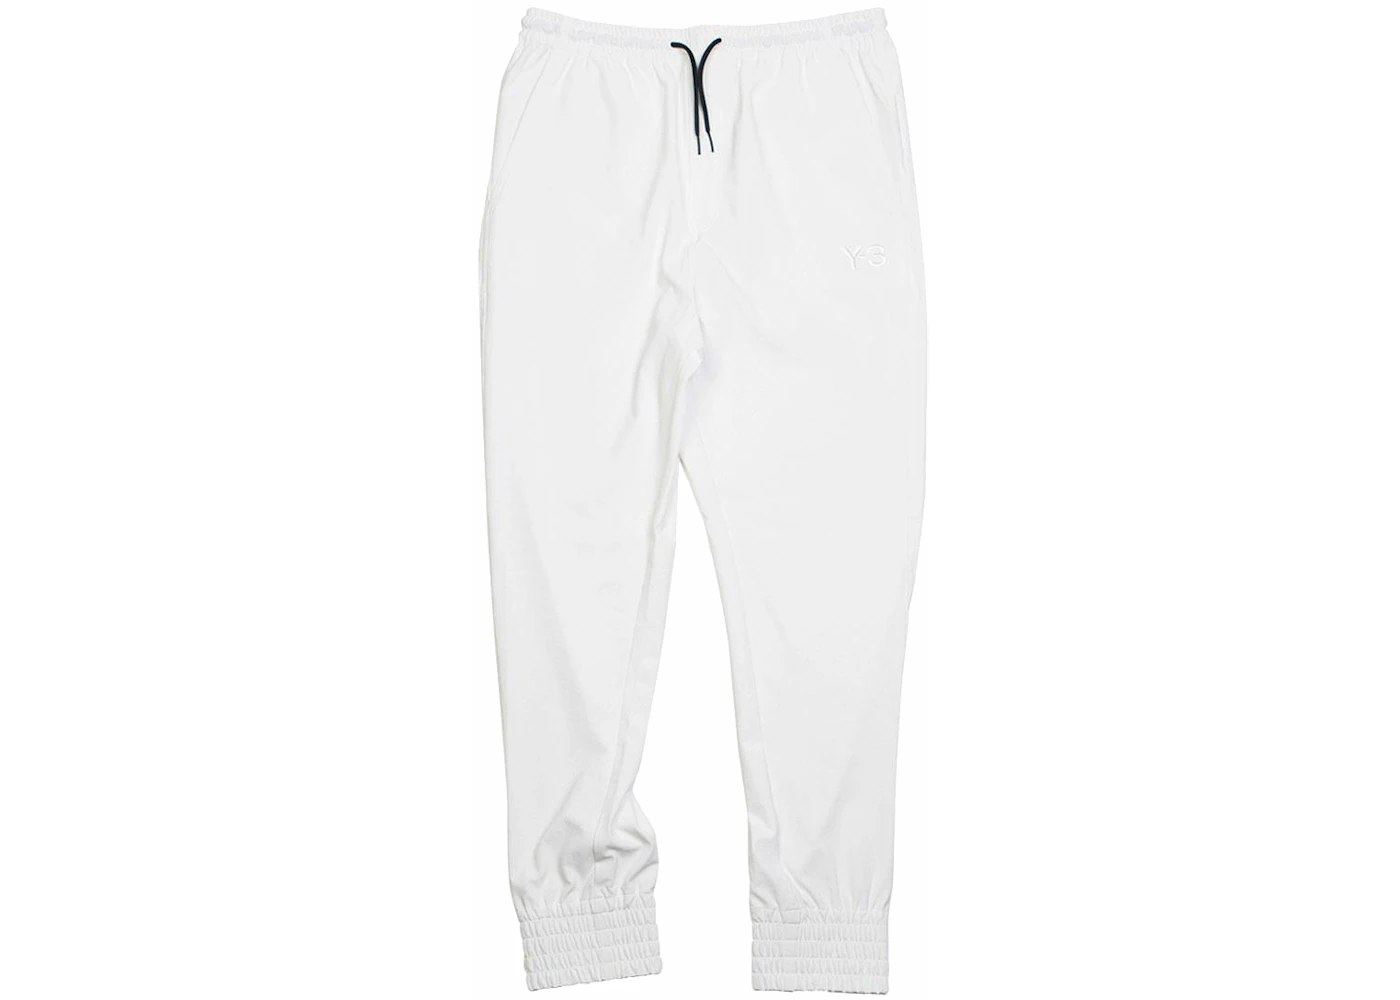 adidas Y-3 PU Cuff Pants White/Black Men's - US